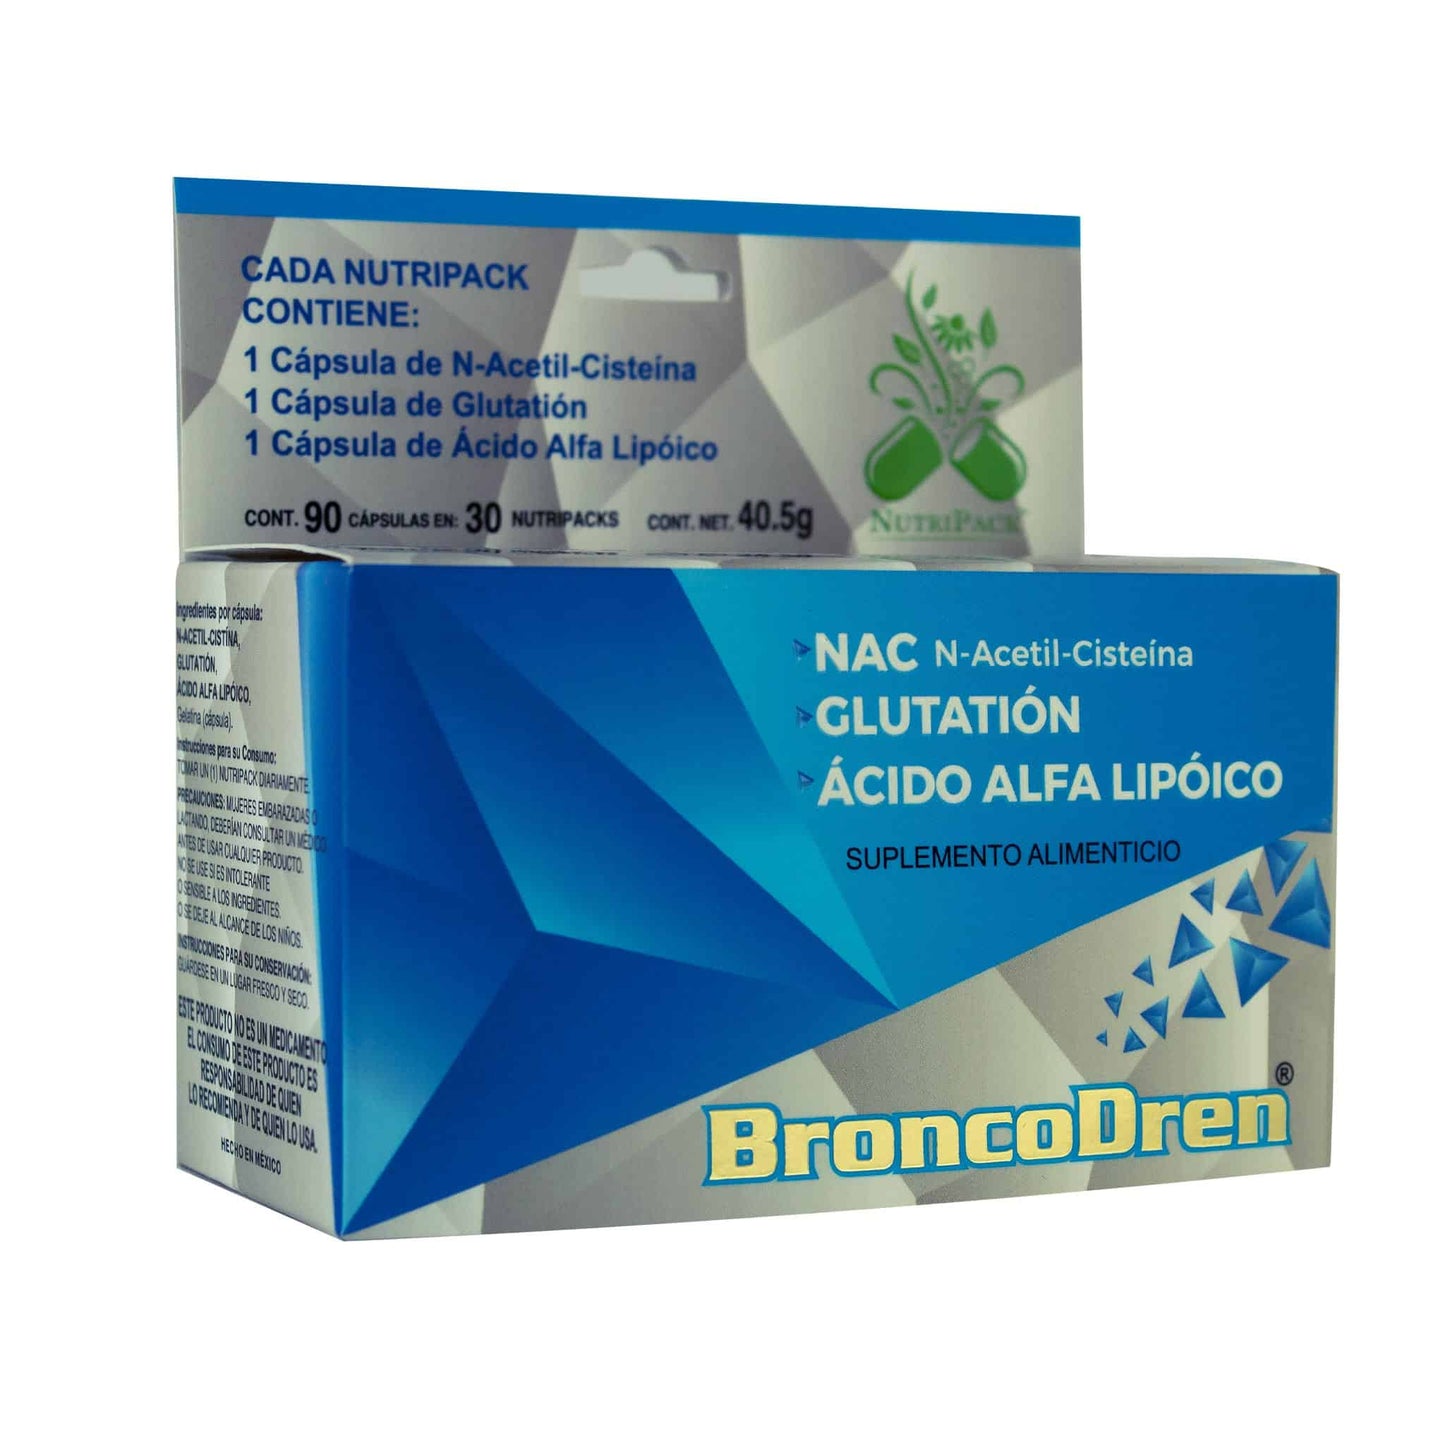 BRONCODREN ® 90 cápsulas en 30 nutripacks